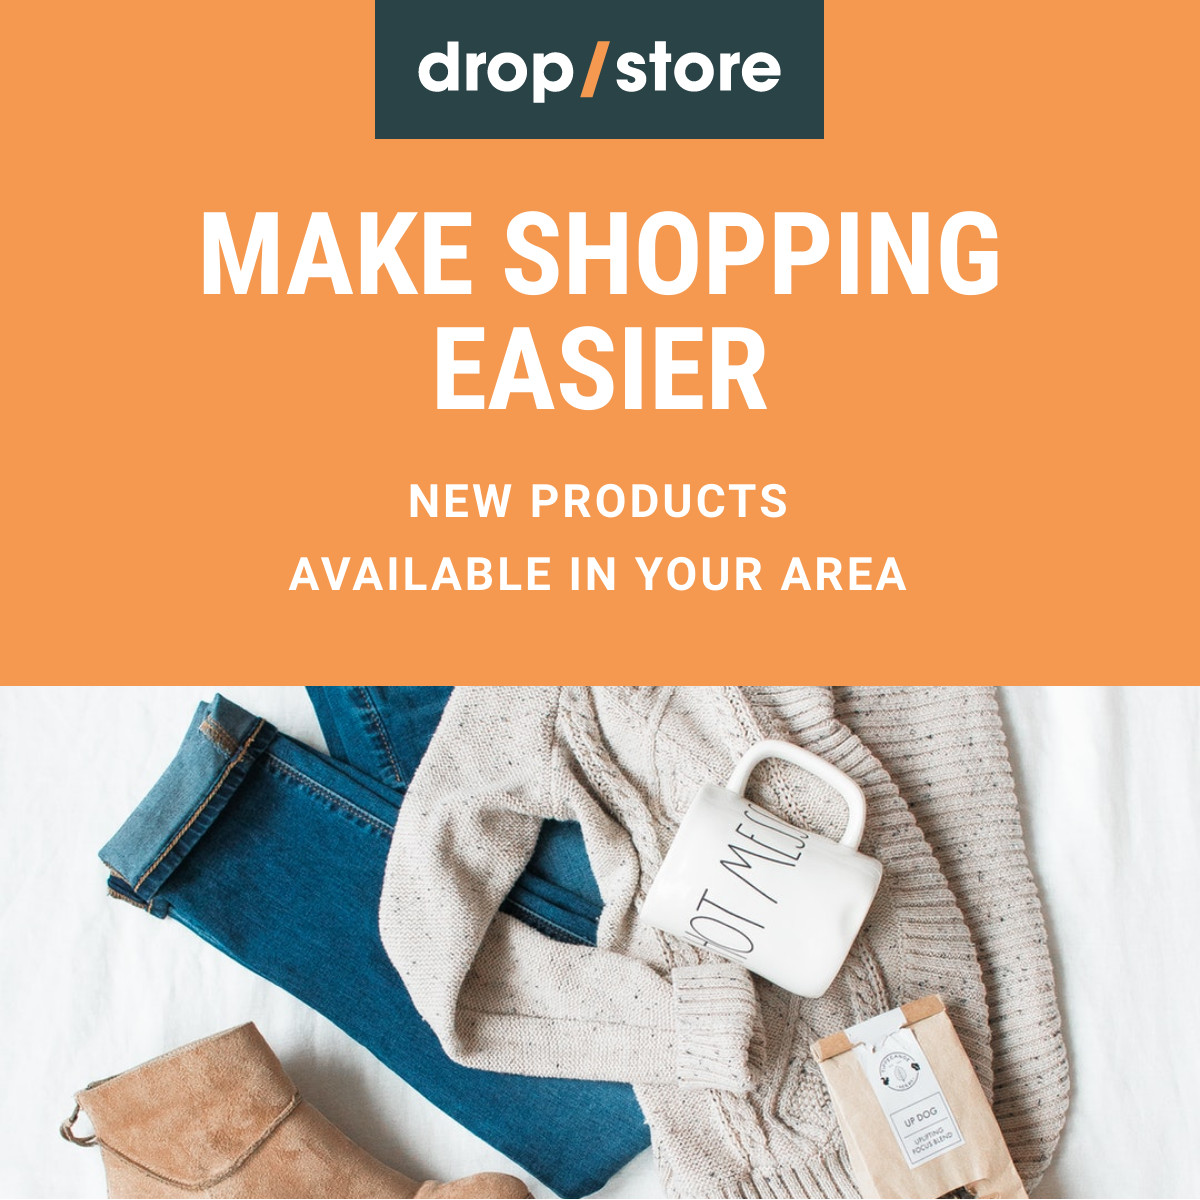 Make Shopping Easier Drop Store Inline Rectangle 300x250